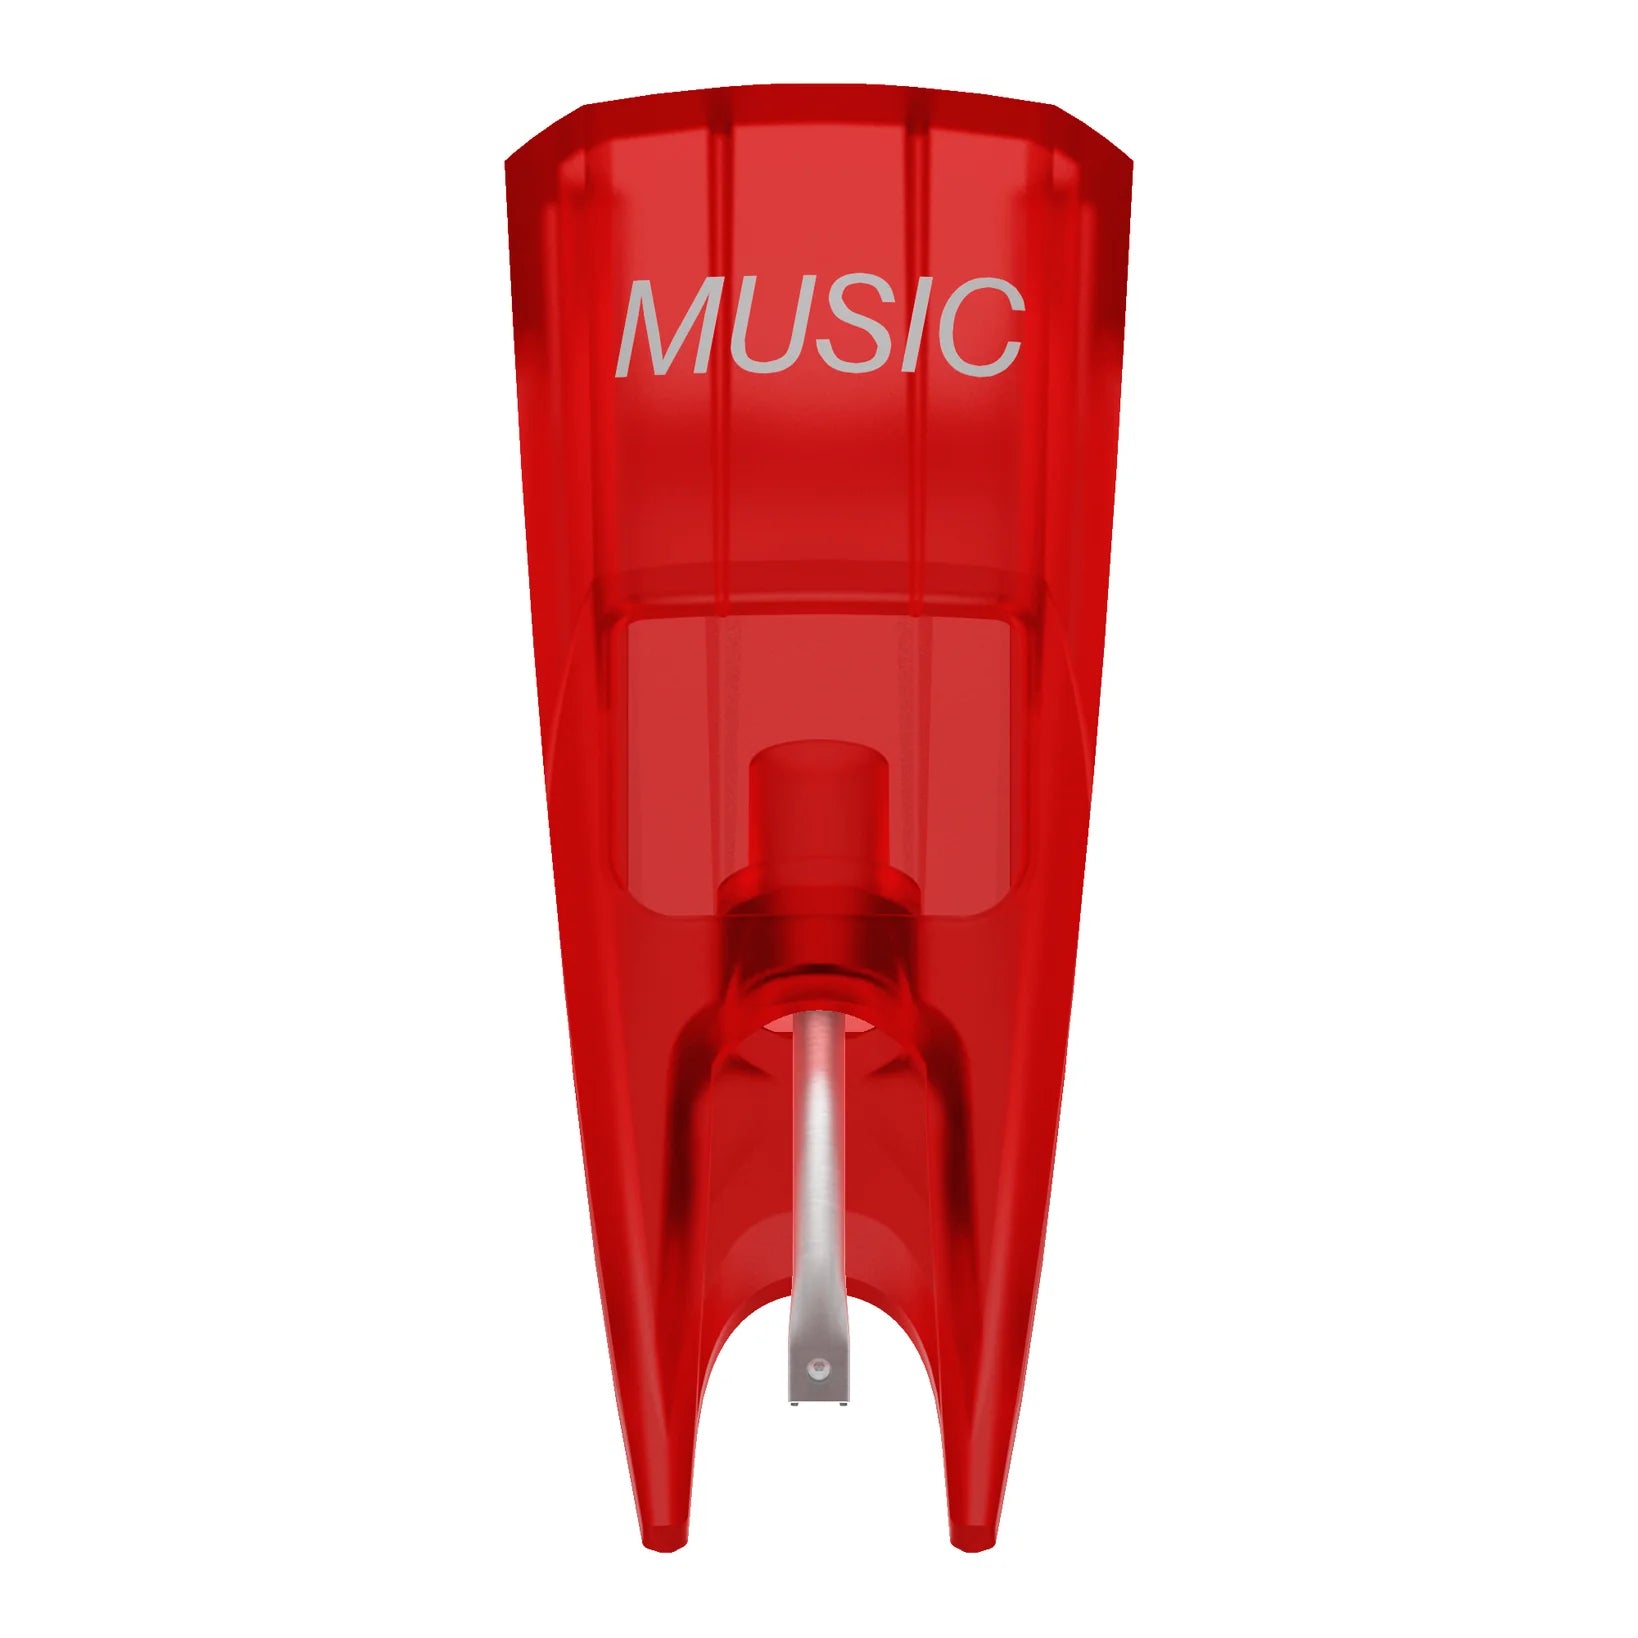 Ortofon Stylus Concorde Music Red replacement stylus